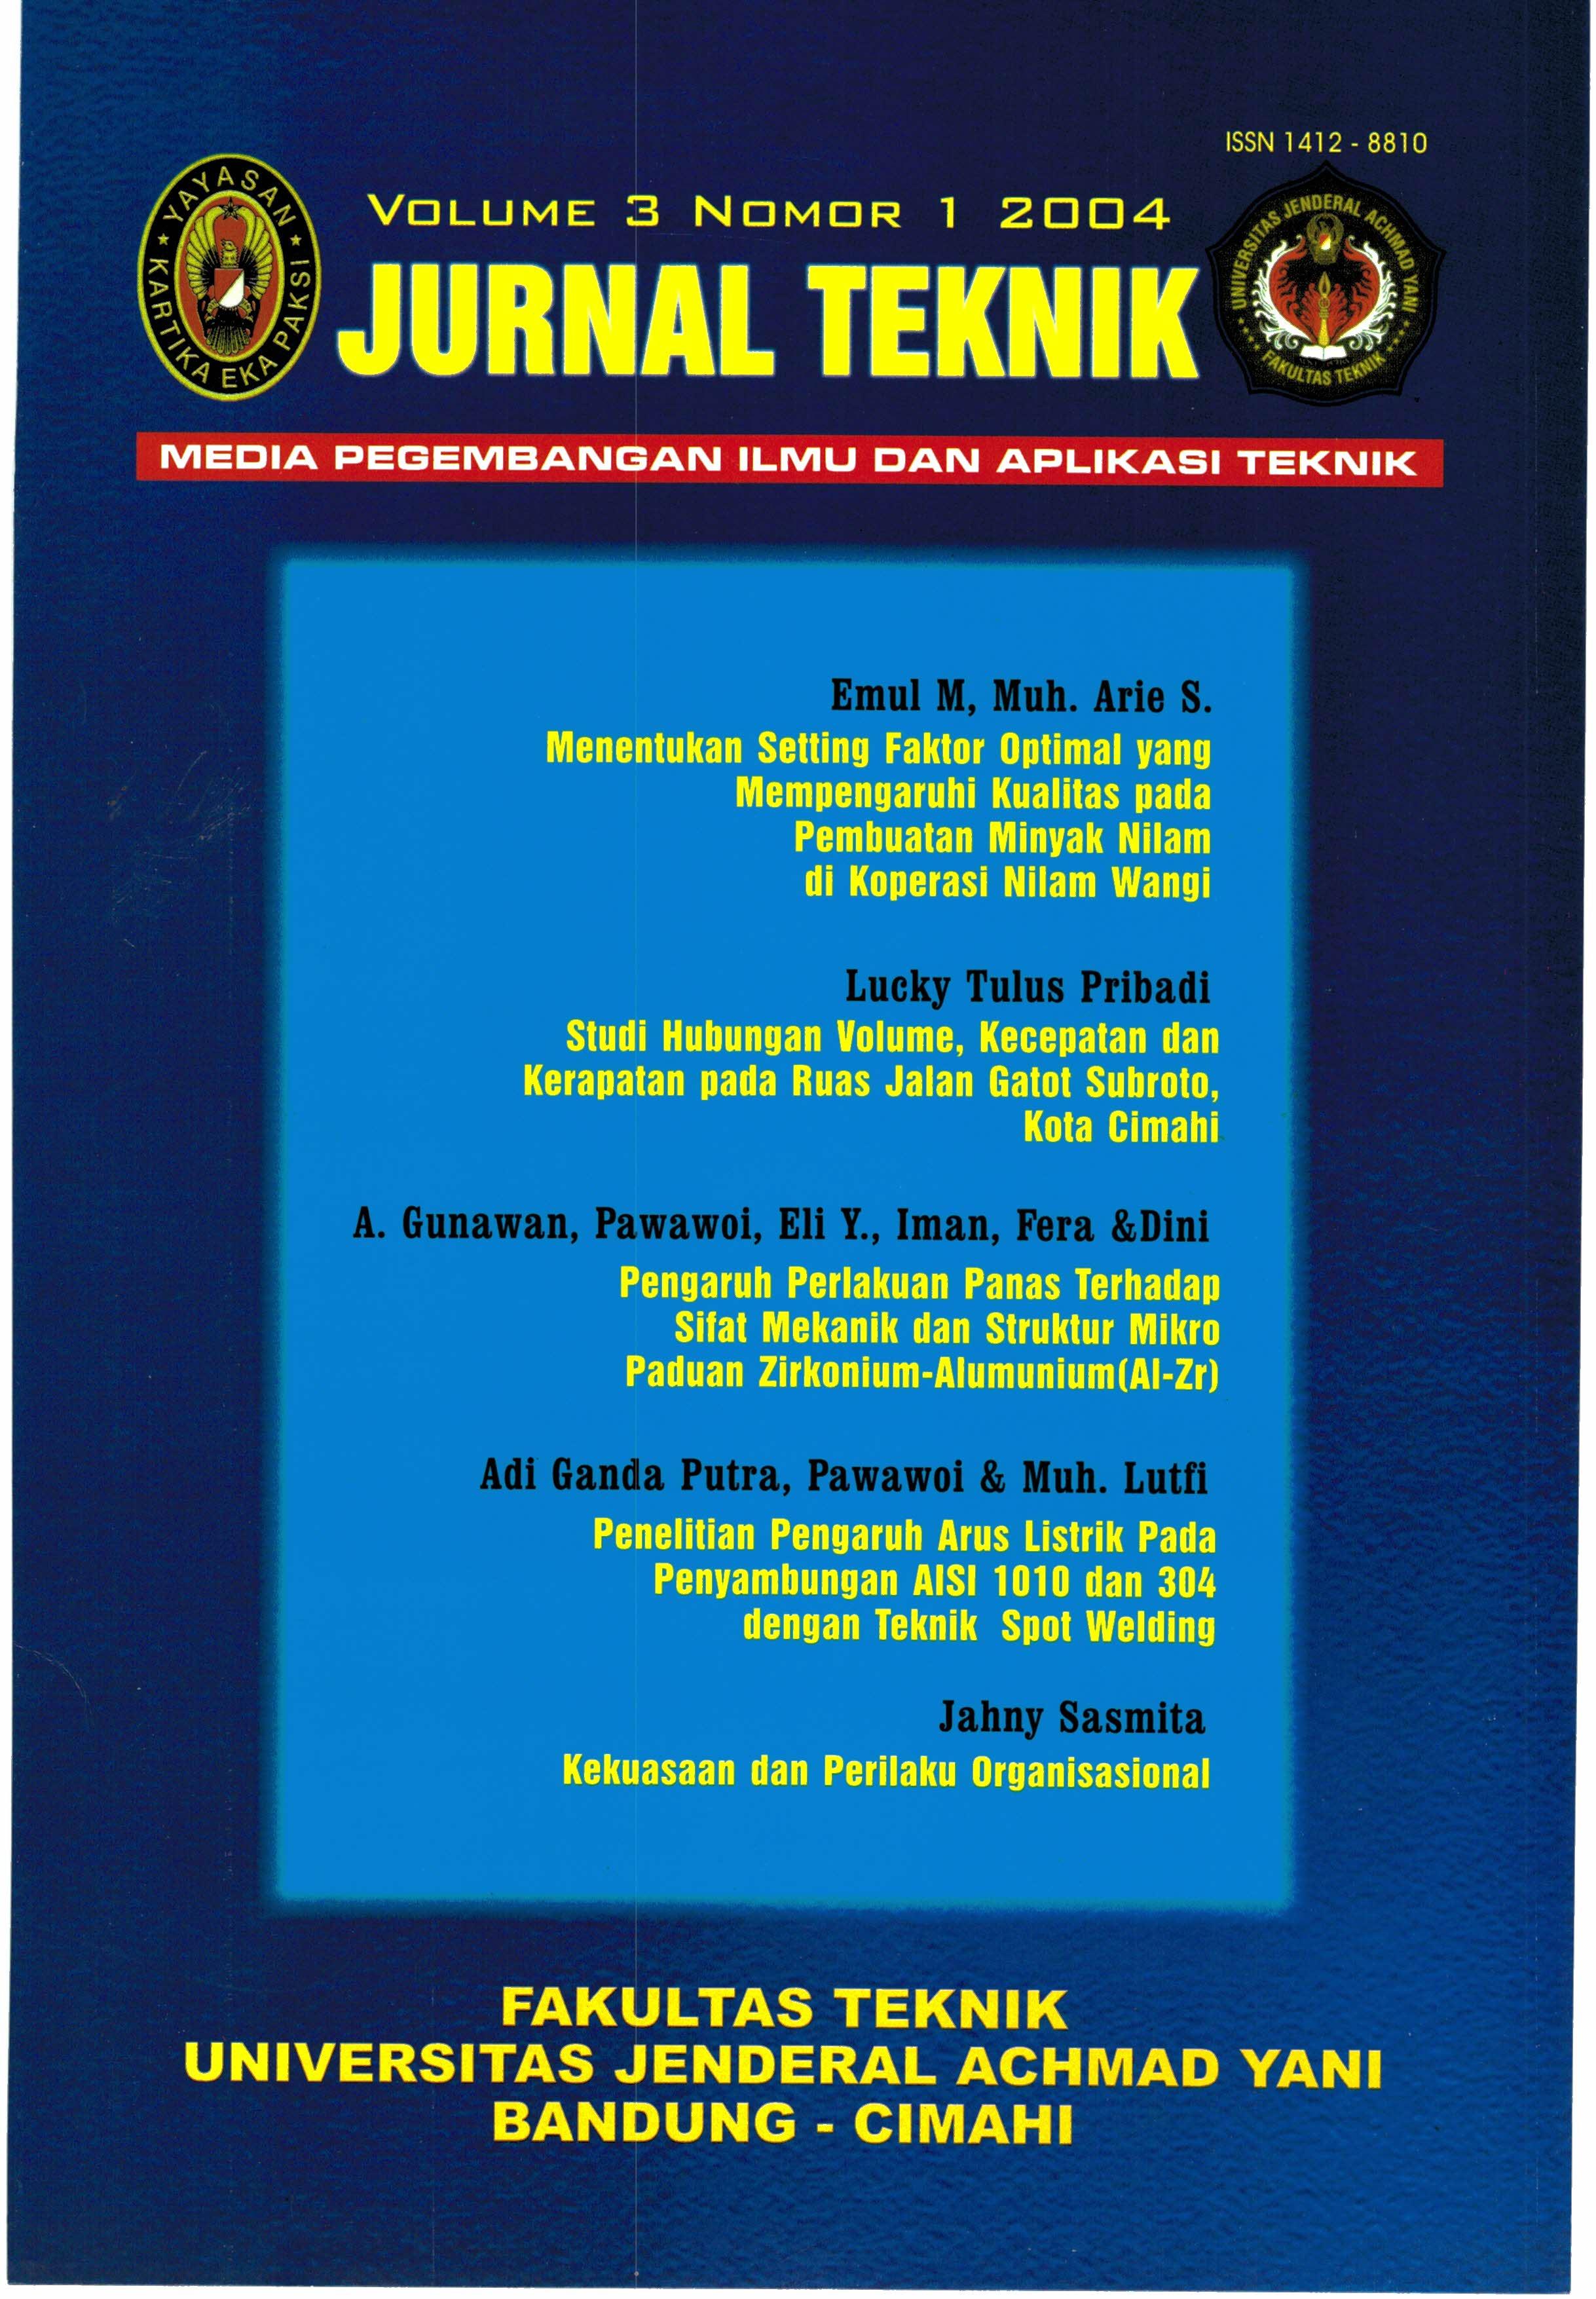 					View Vol. 3 No. 1 (2004):  Jurnal Teknik - Media Pengembangan Ilmu dan Aplikasi Teknik
				